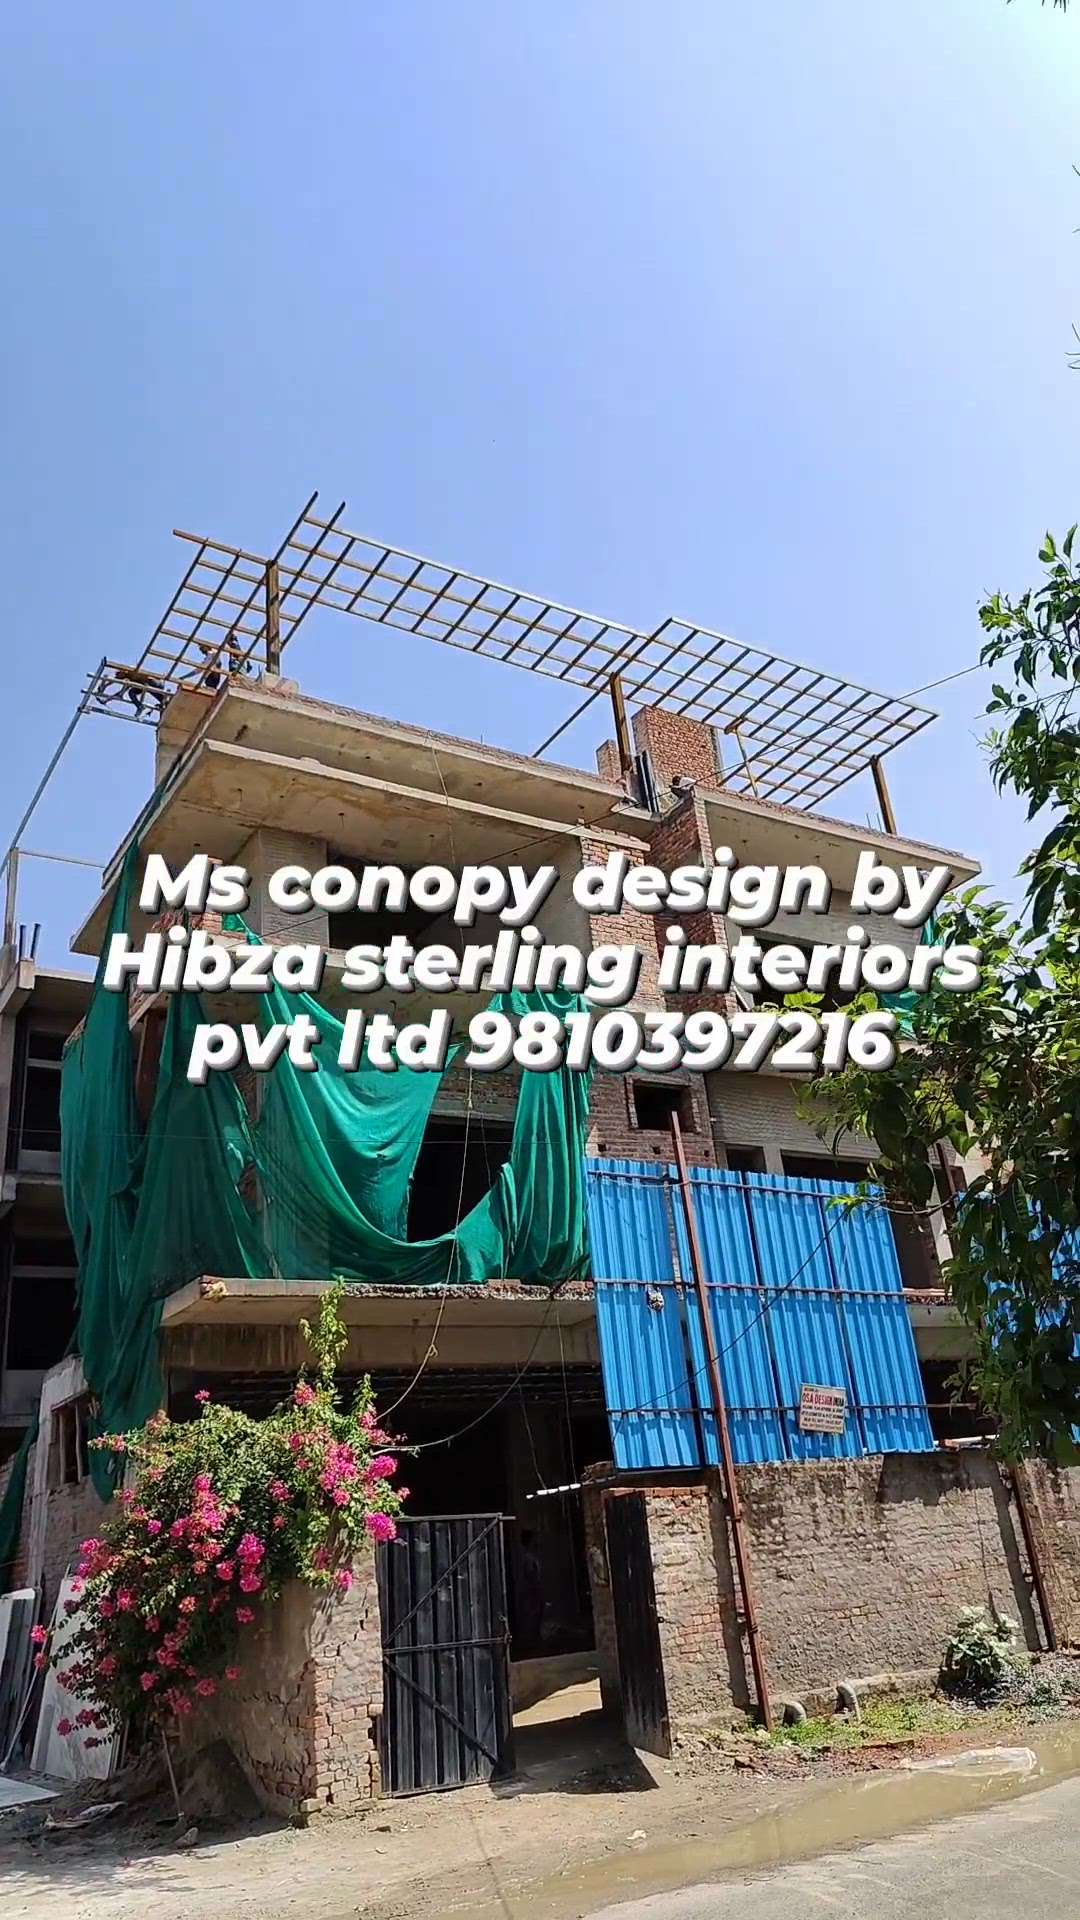 Ms conopy design by Hibza sterling interiors pvt ltd manufacture all NCR #mscanopy #canopy #canopydesign #pergolaladesing #pegola #terrcegardan